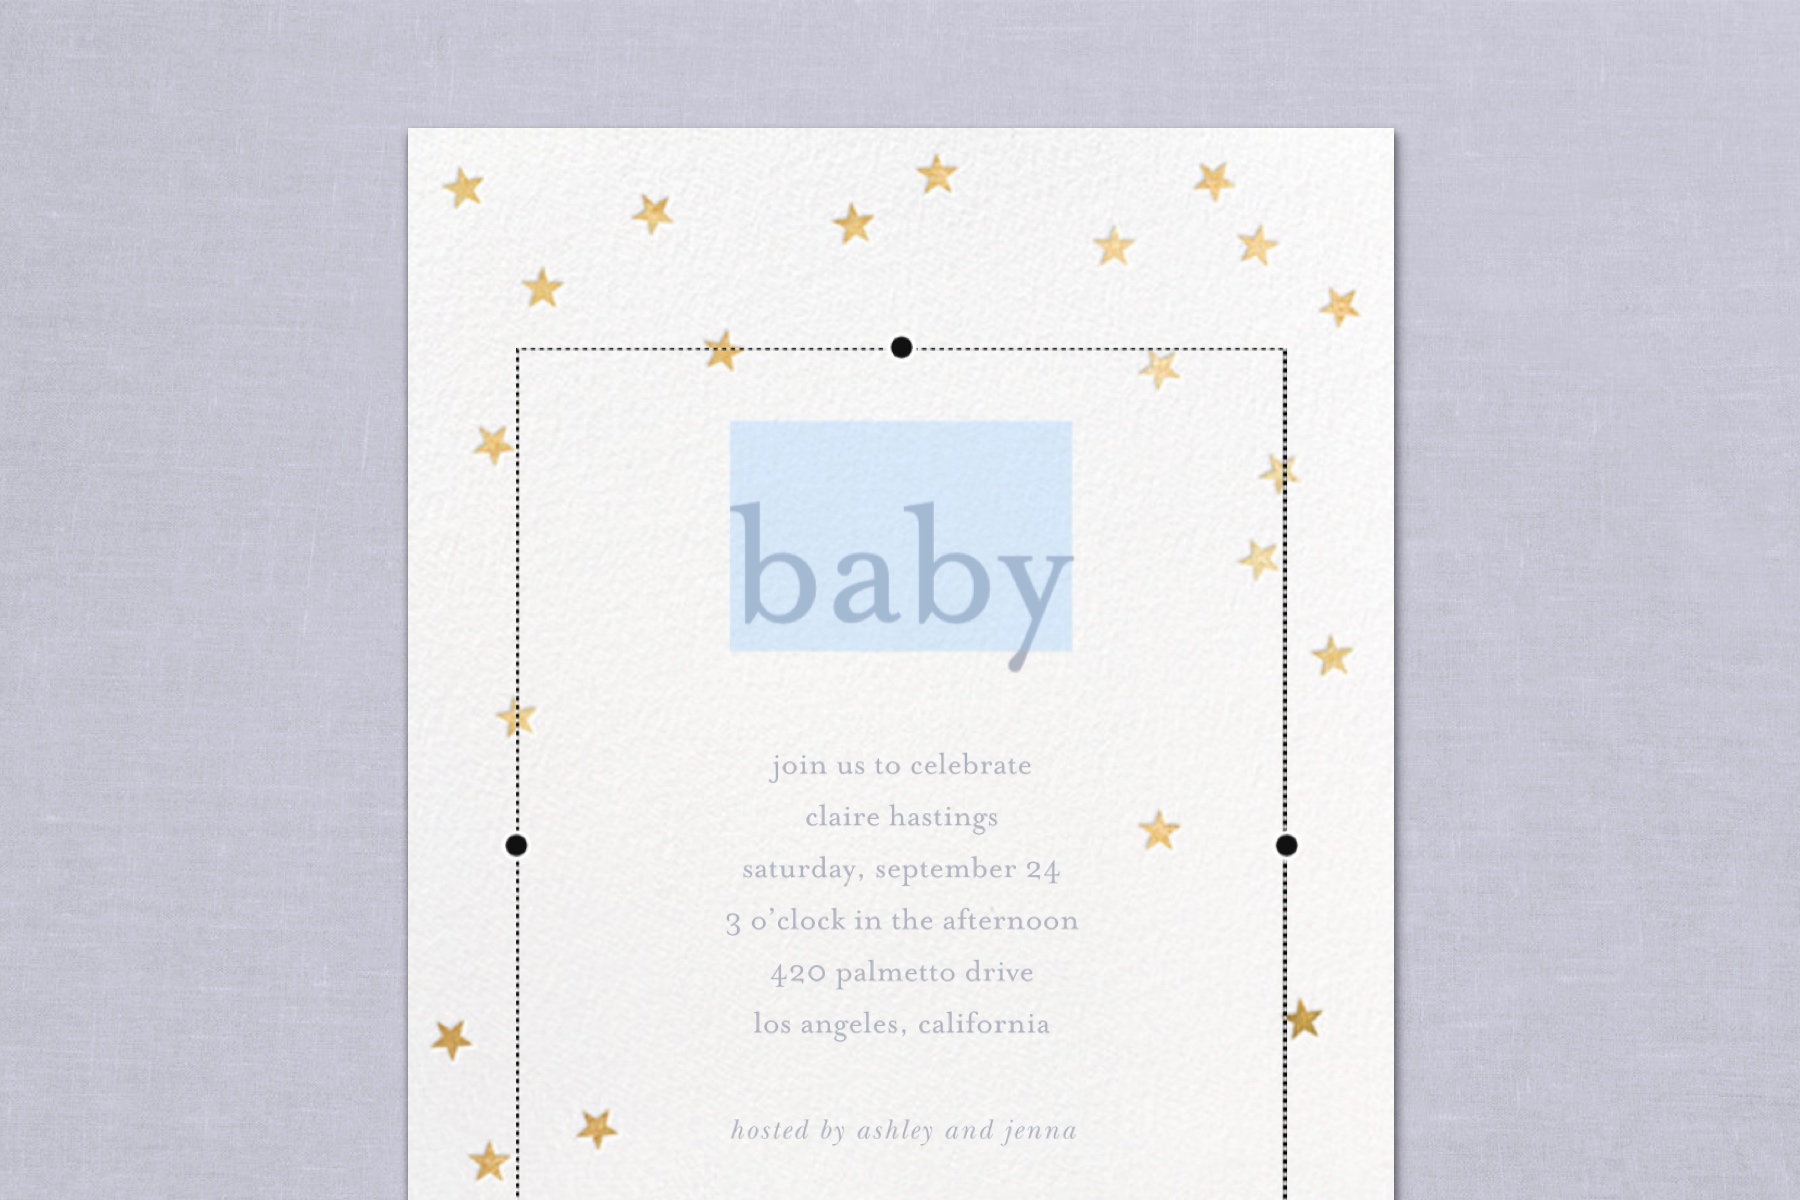 Baby shower invitation wording ideas & etiquette | Paperless Post